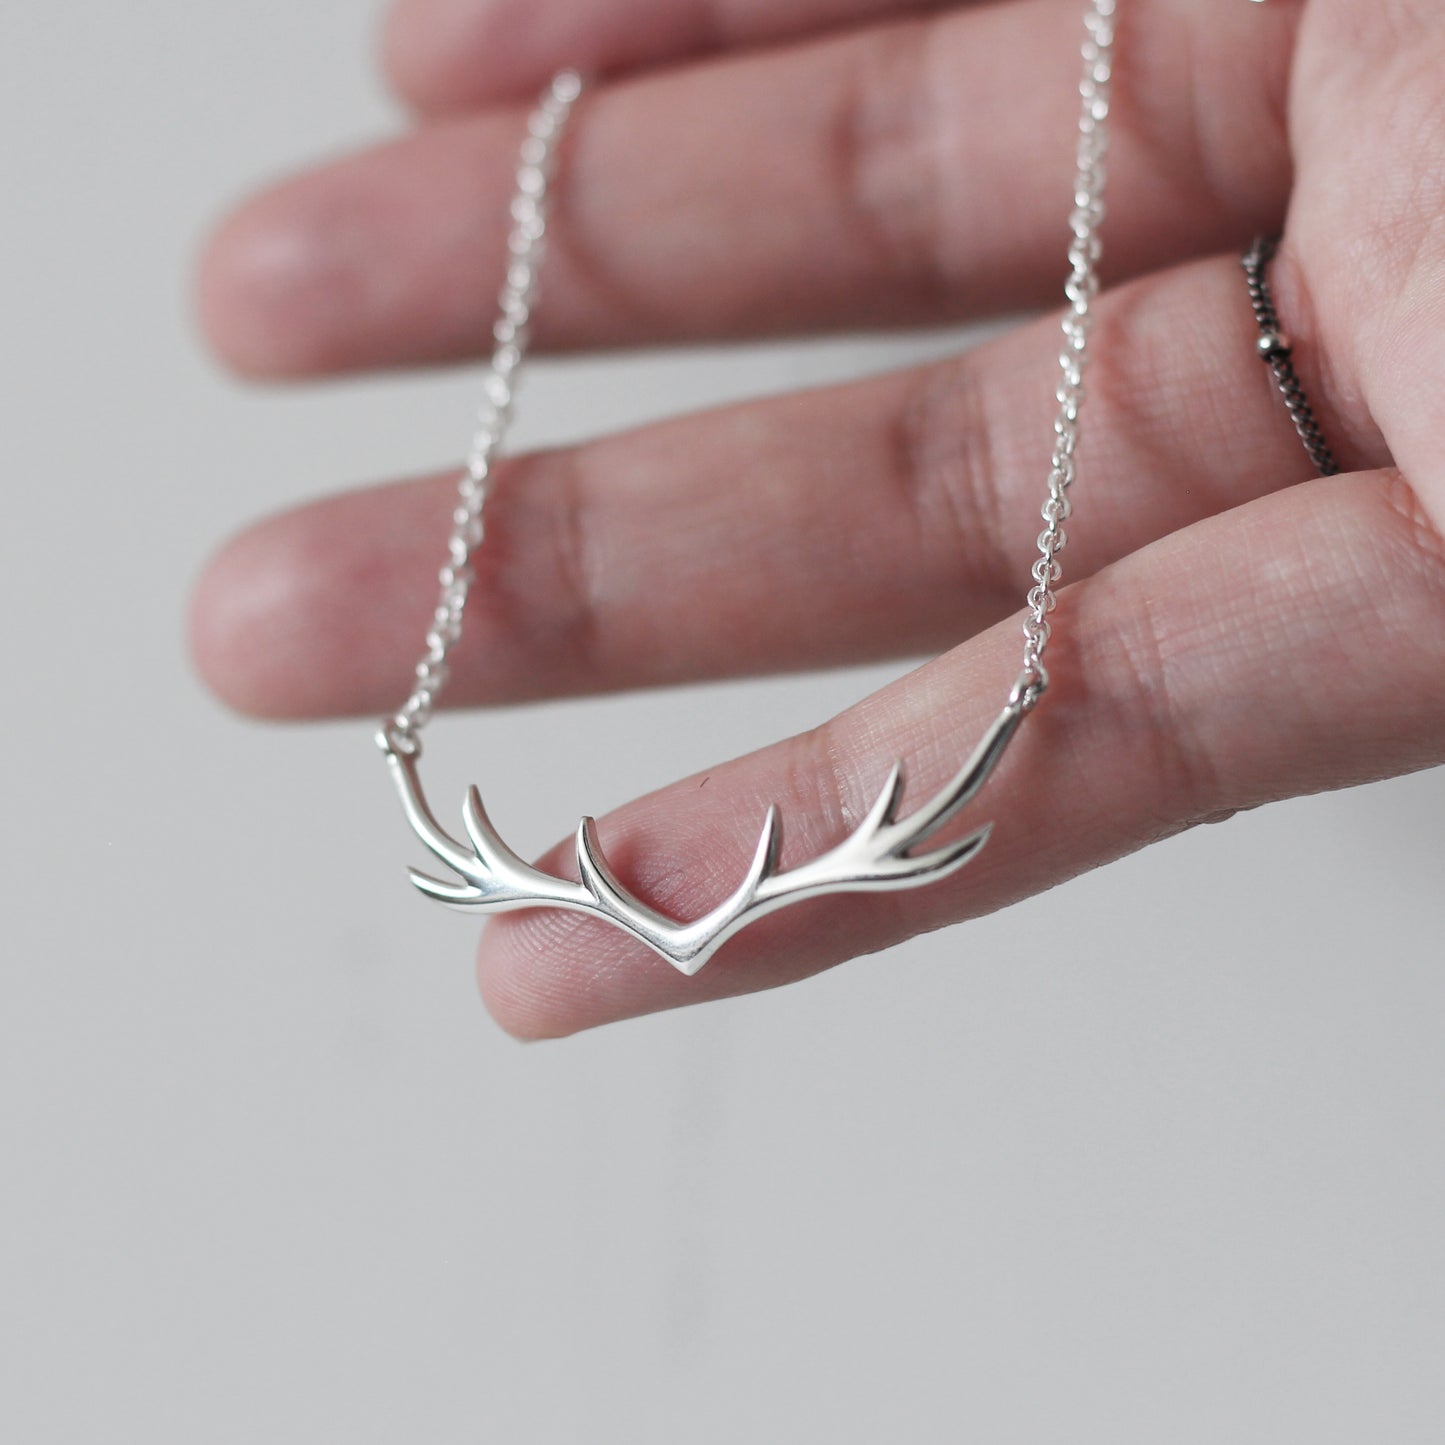 My Deer Necklace - Silver